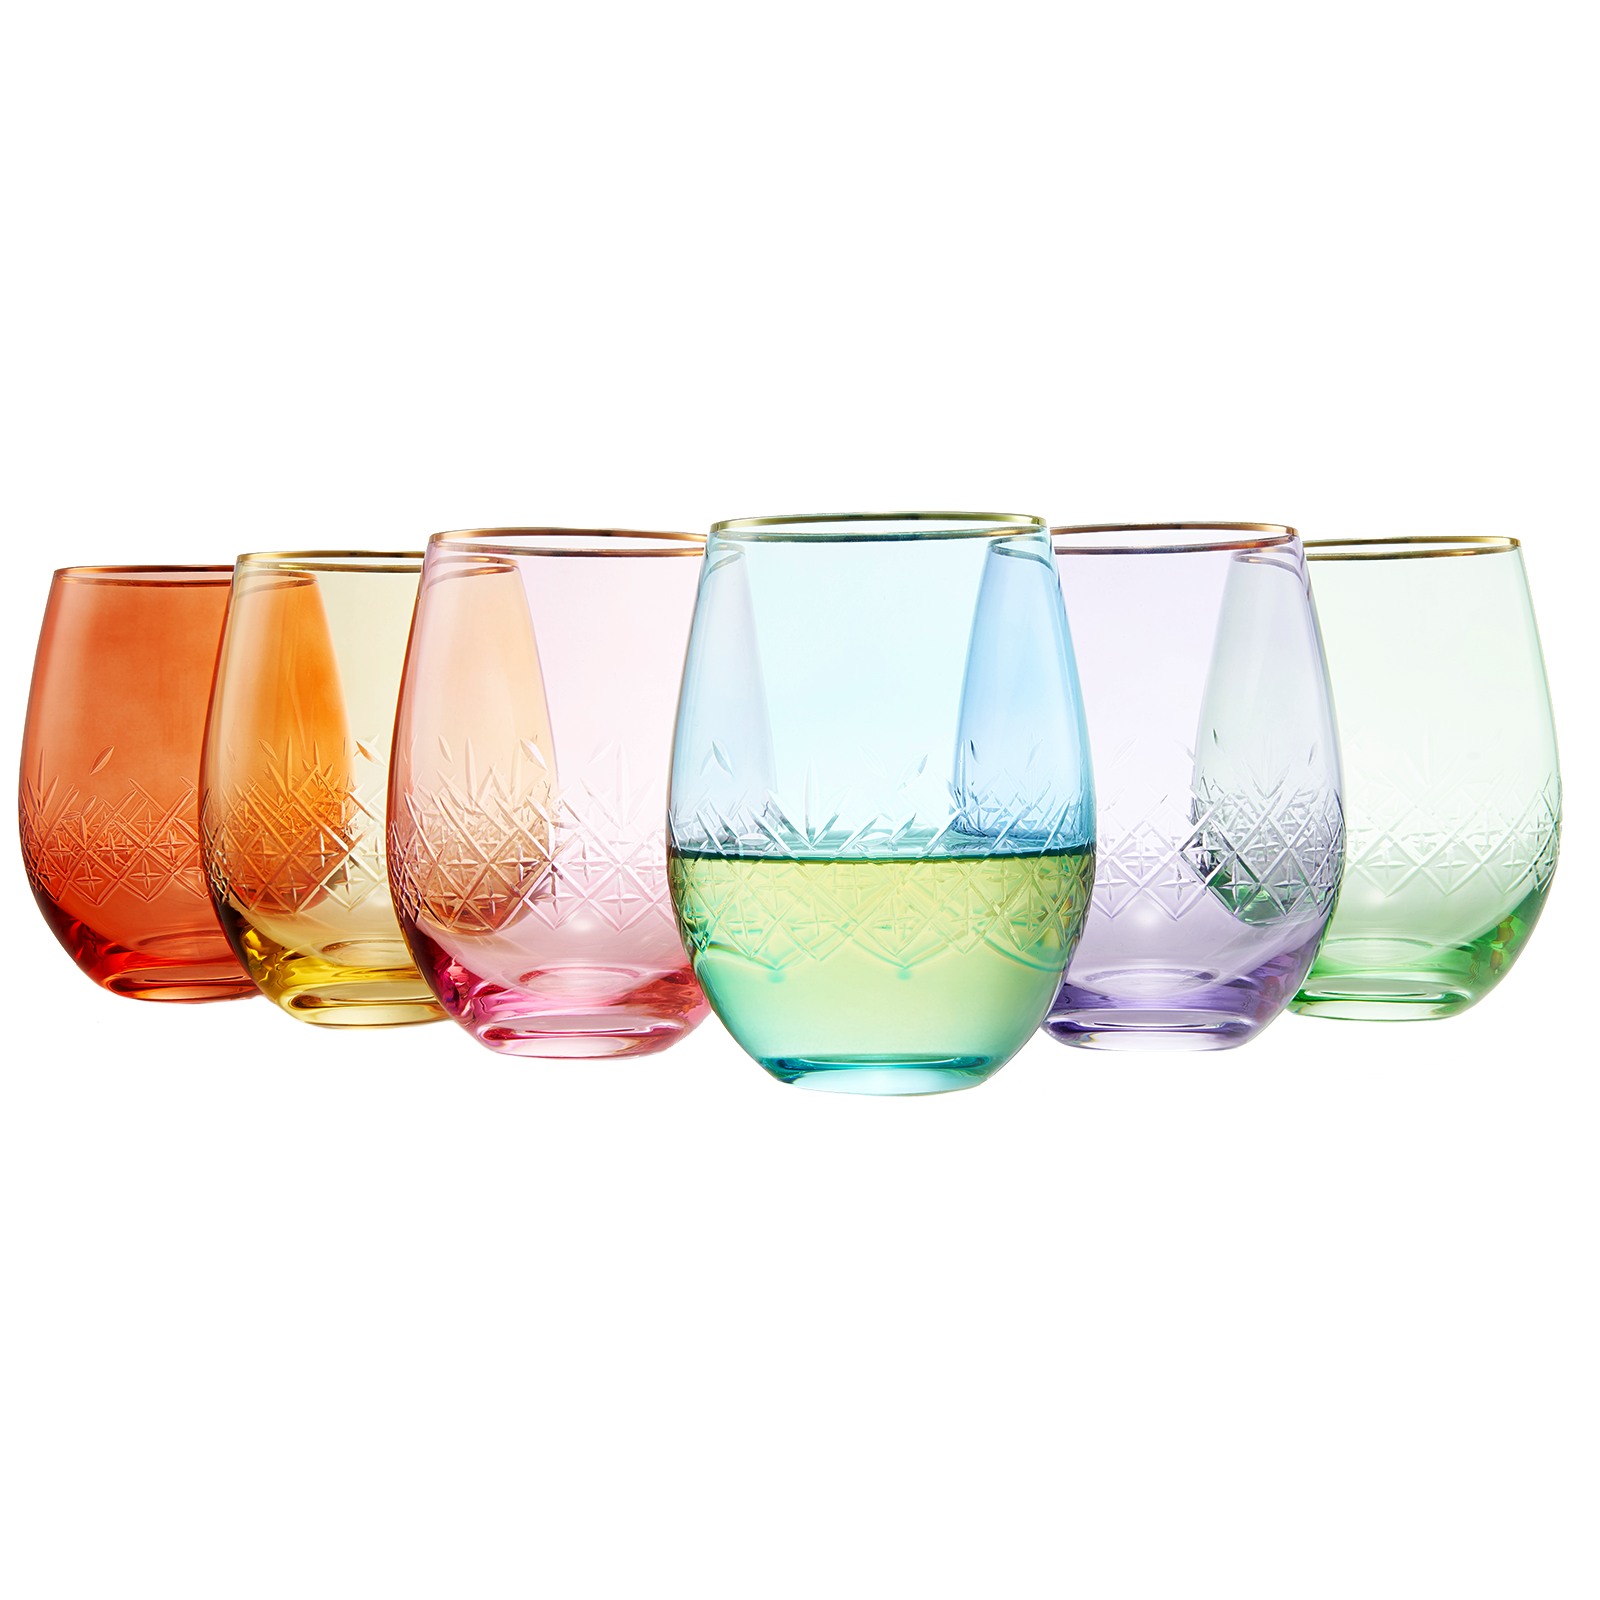 Vintage Multi Colored Clear Twisted Stem Wine Glasses Set of 6, 4